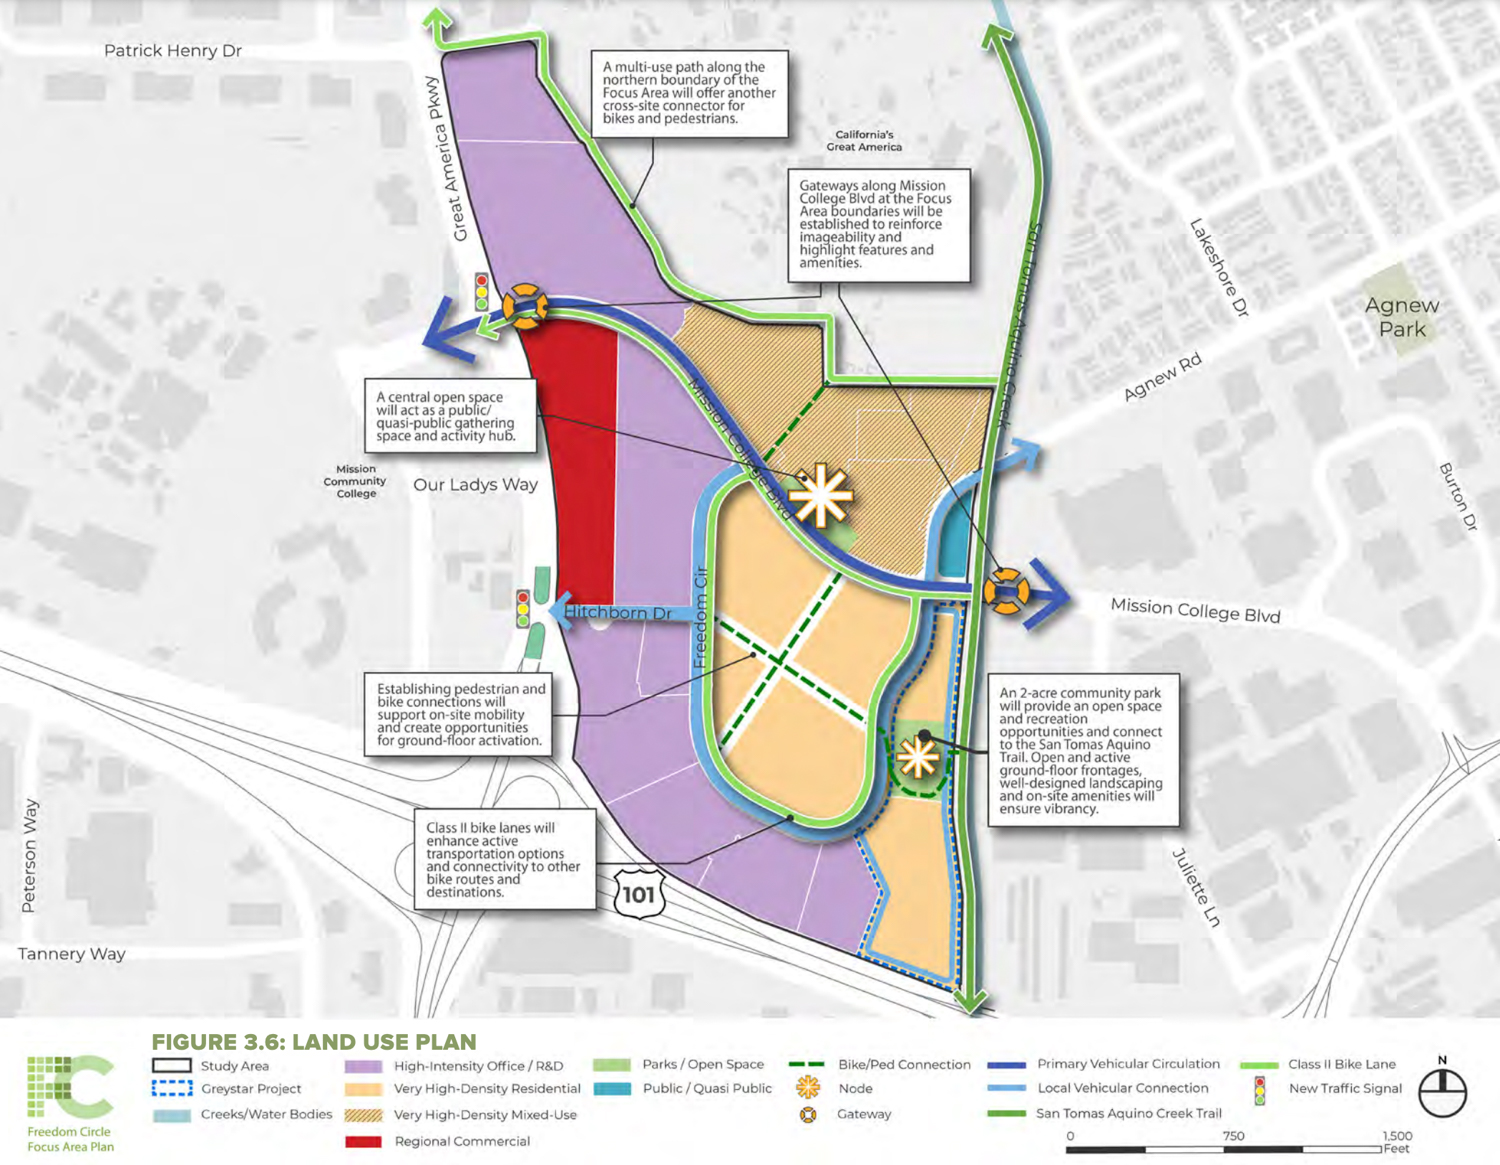 Freedom Circle land use plan, image via City Planning Documents